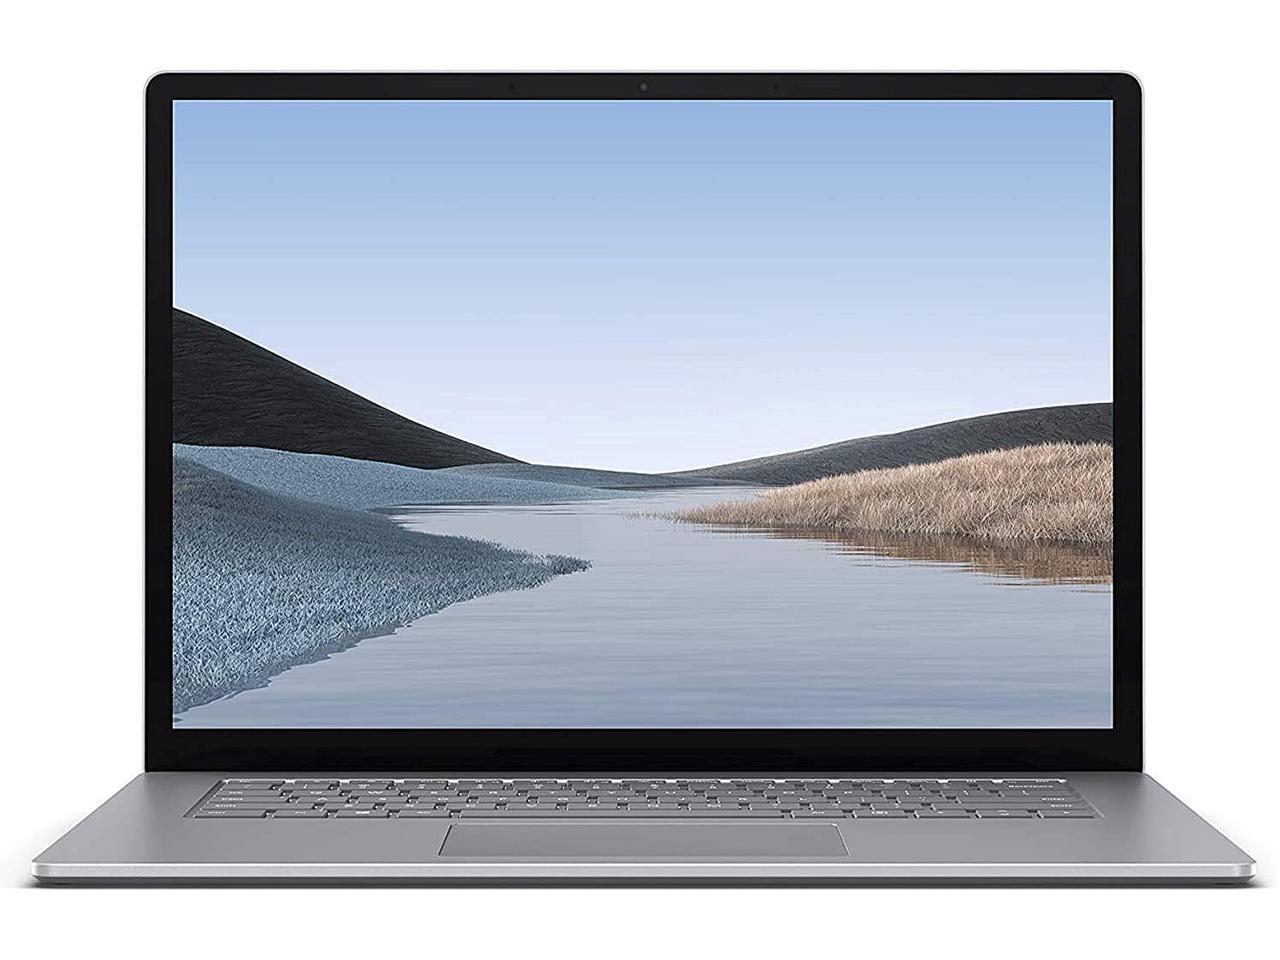 Microsoft Laptop Surface Laptop 3 PLR-00001 AMD Ryzen 5 3000 Series 3580U (2.10GHz) 8GB Memory 128 GB SSD AMD Radeon Vega 9 15.0" Touchscreen Windows 10 Home 64-bit